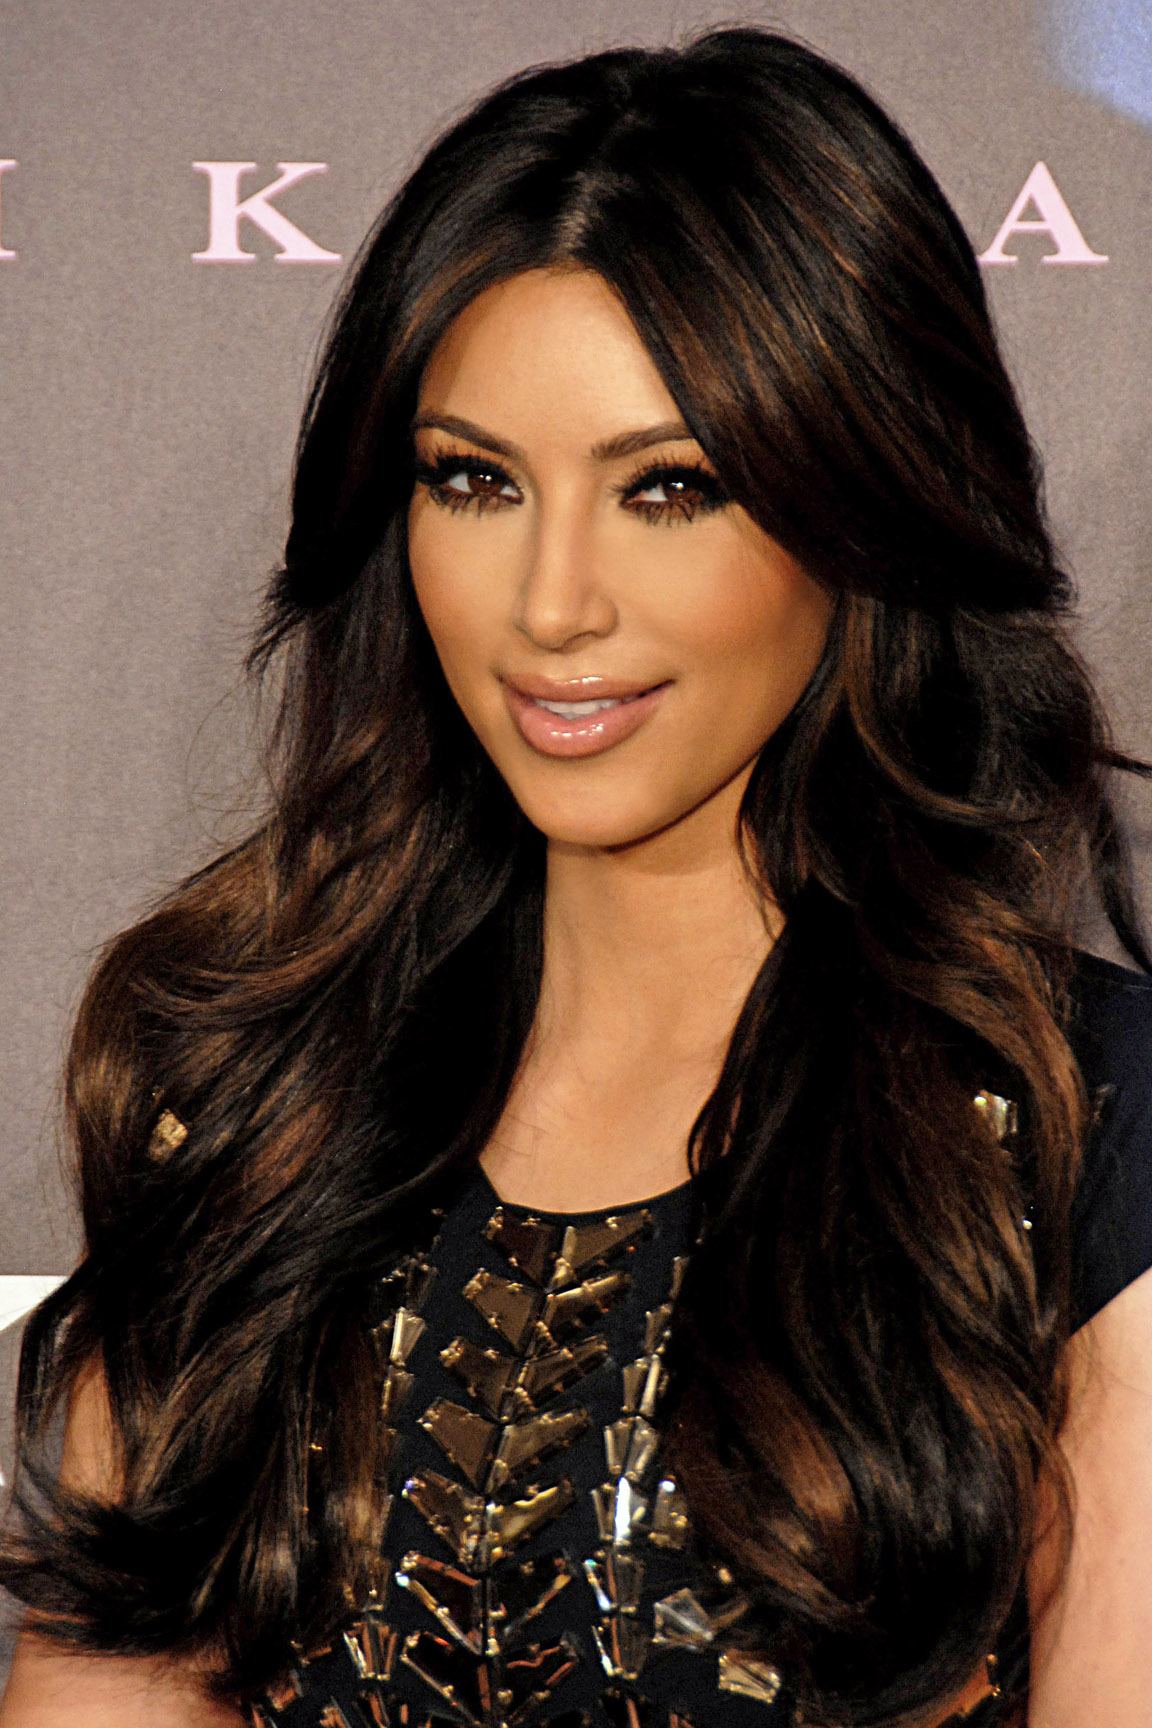 Kim Kardashian studying law, hopes to pass California bar exams by 2022